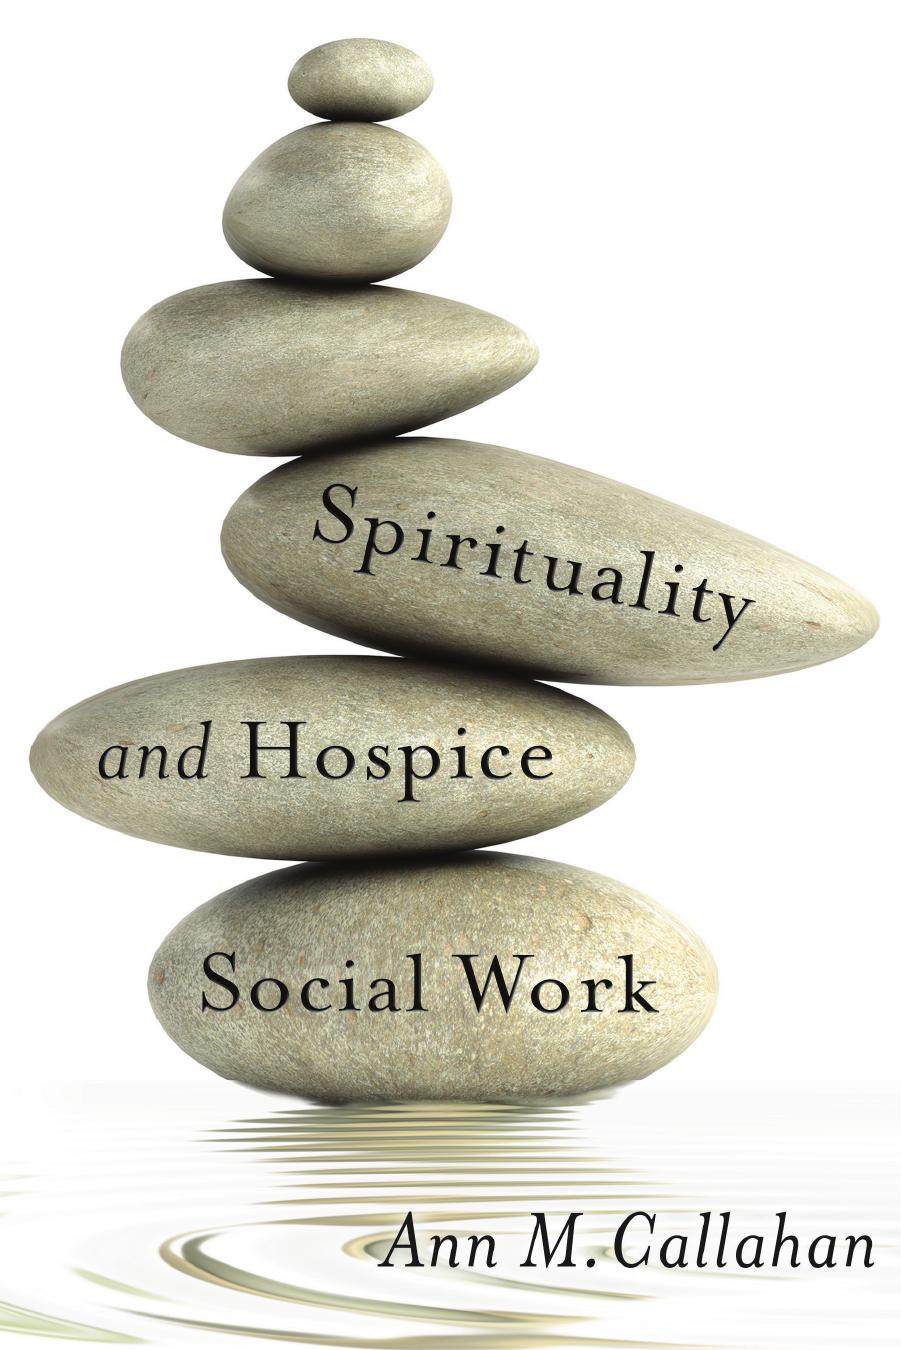 Spirituality and Hospice Social Work 2017